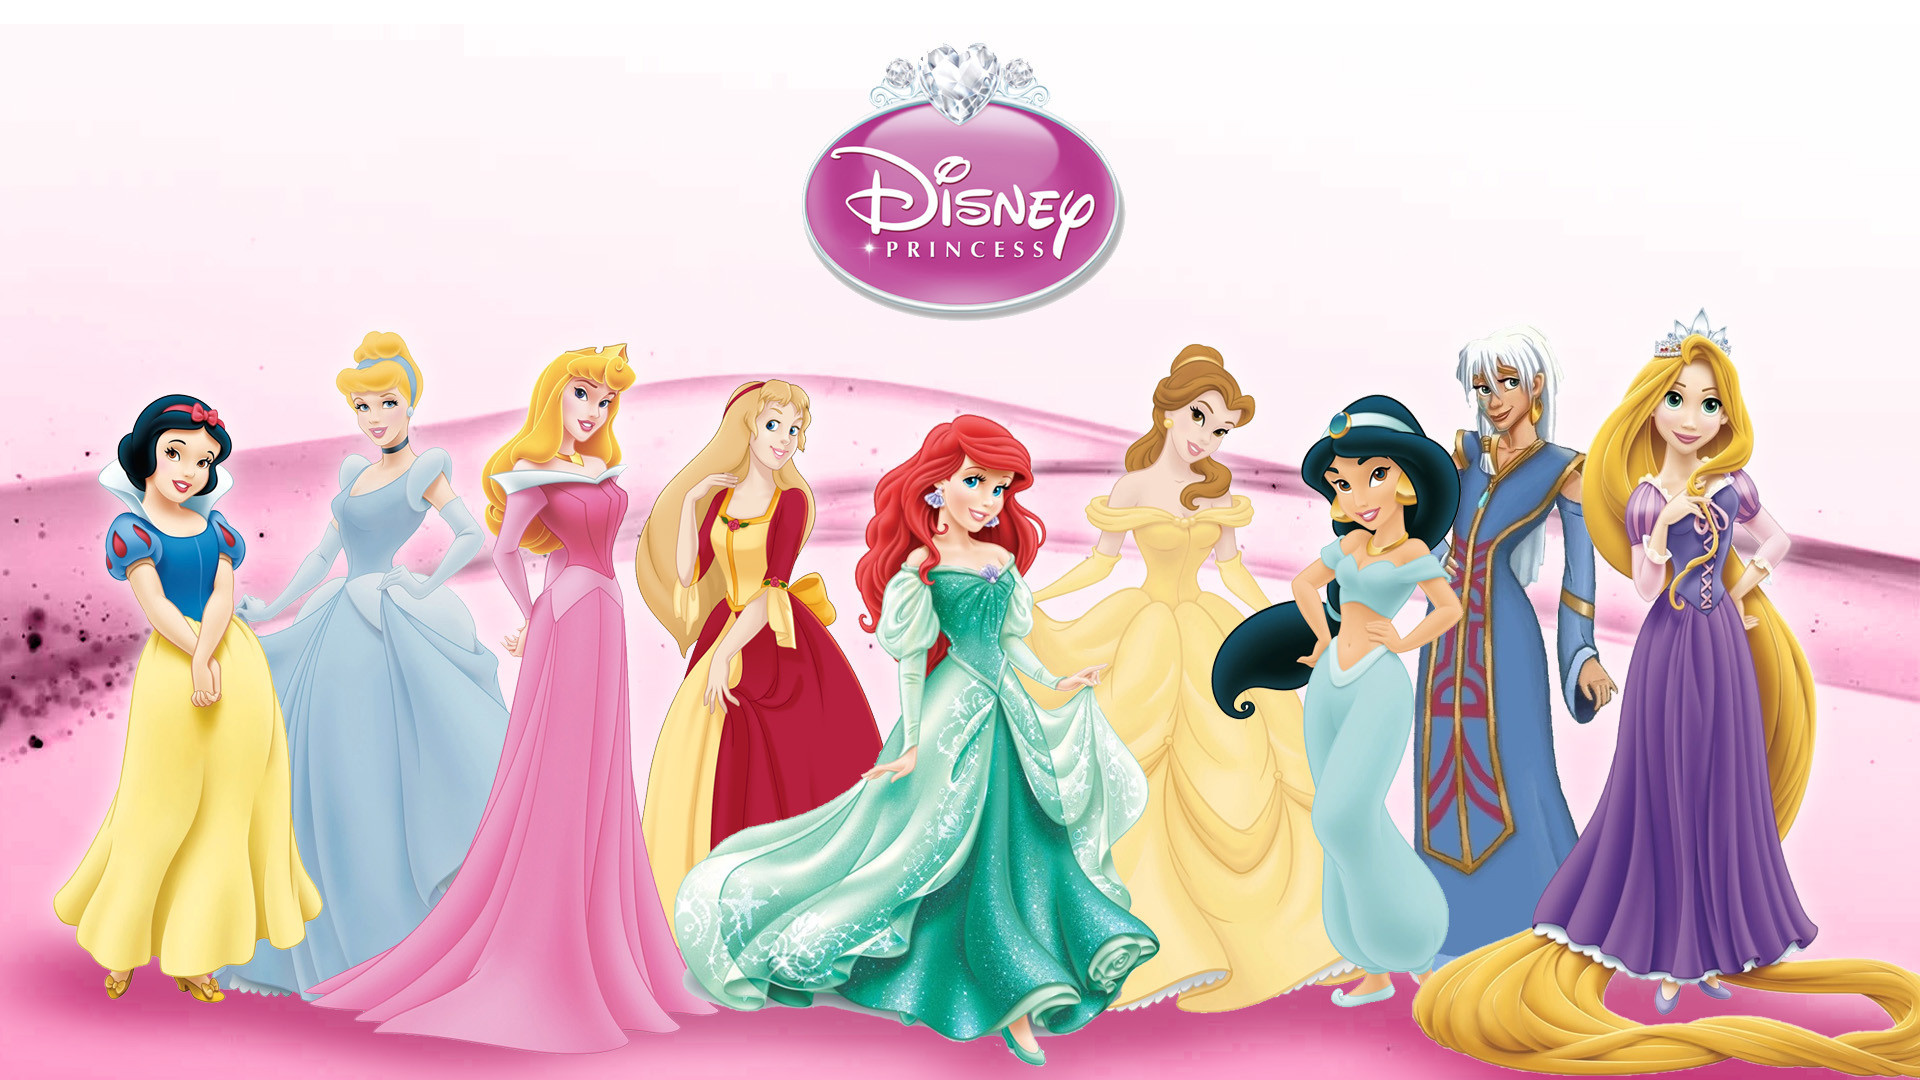 Princess Aurora wallpaper, Disney princess, Fairytale illustrations, Romantic vibes, 1920x1080 Full HD Desktop